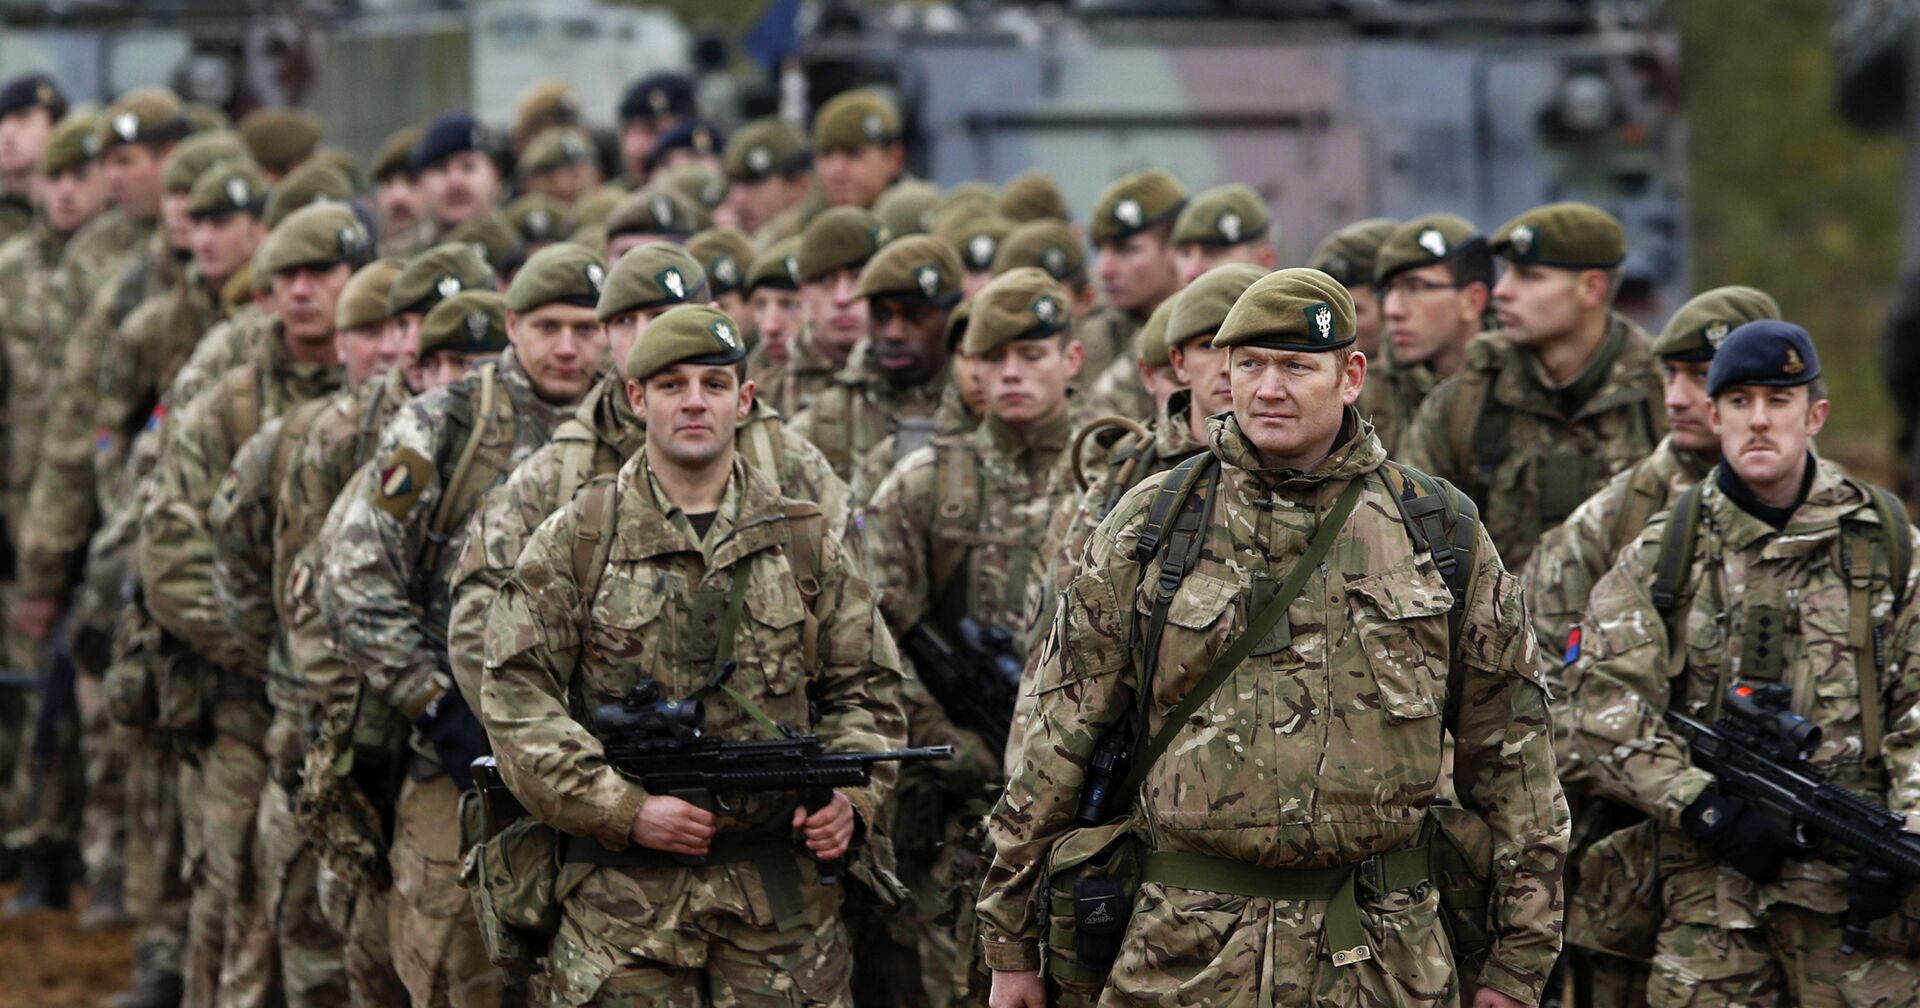 Британские солдаты на учениях НАТО Iron Sword 2014 в Литве - ИноСМИ, 1920, 15.02.2021